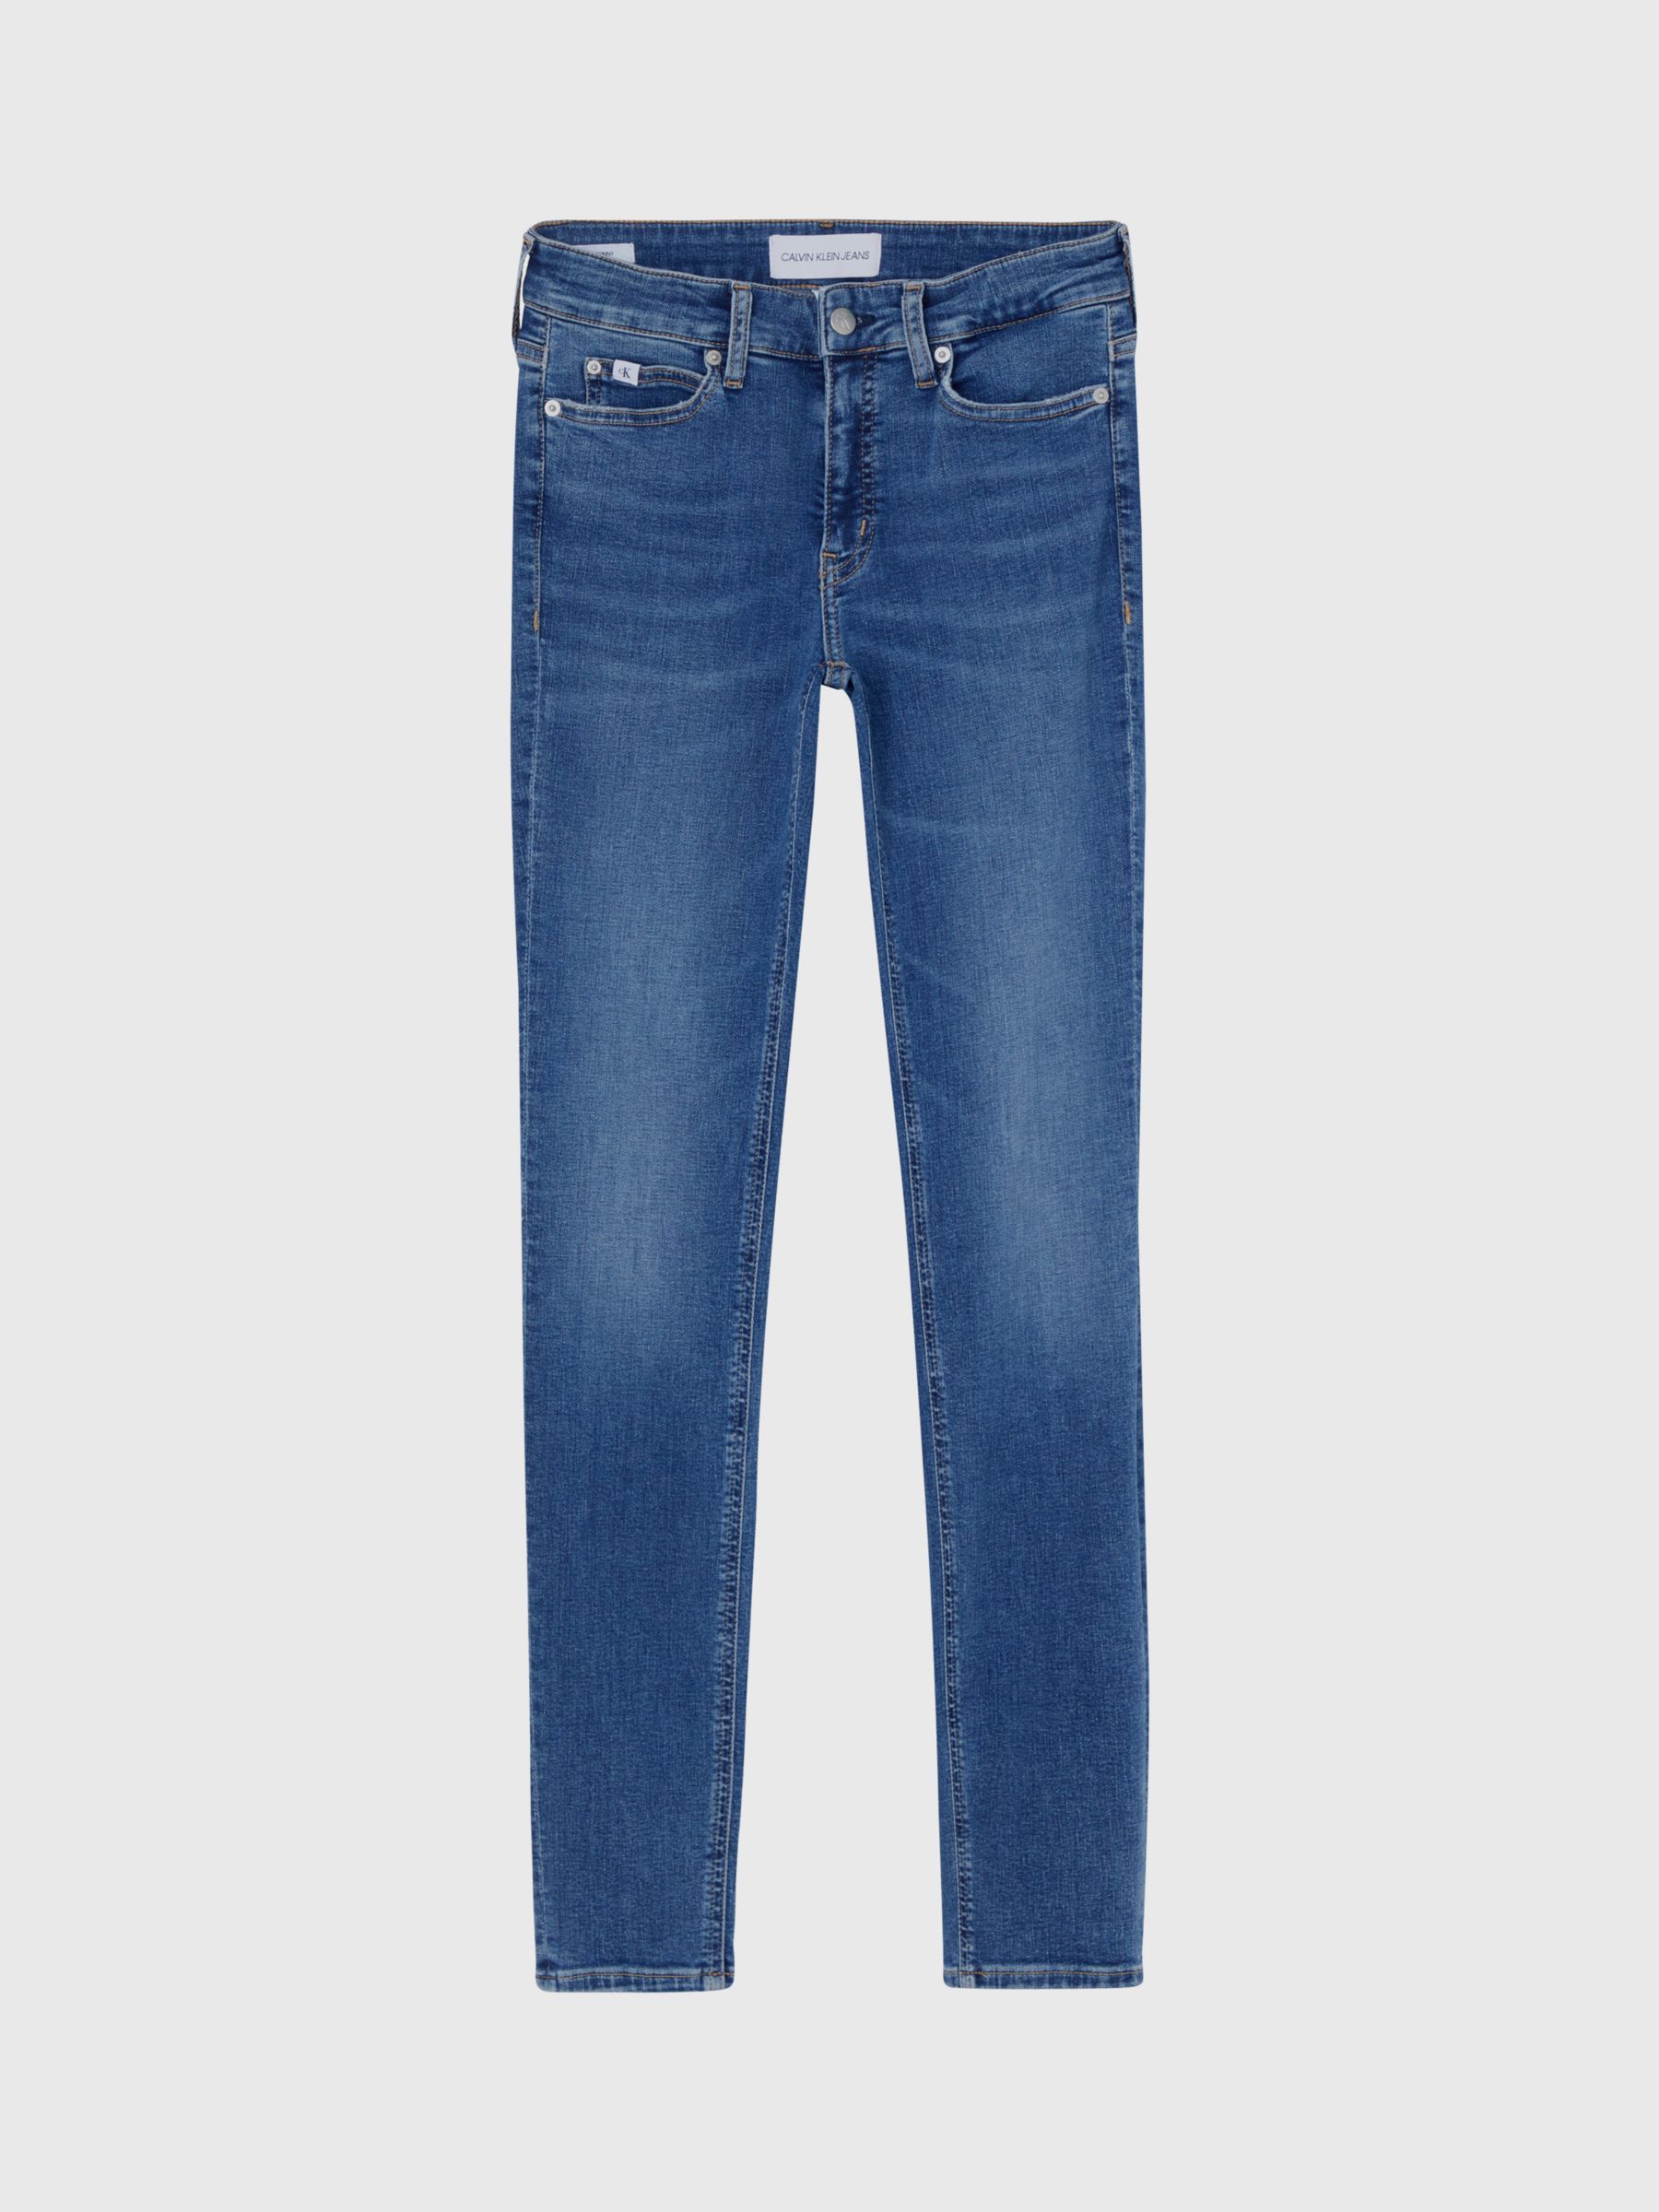 Calvin Klein Mid Rise Skinny Jeans, Denim Dark, 26R